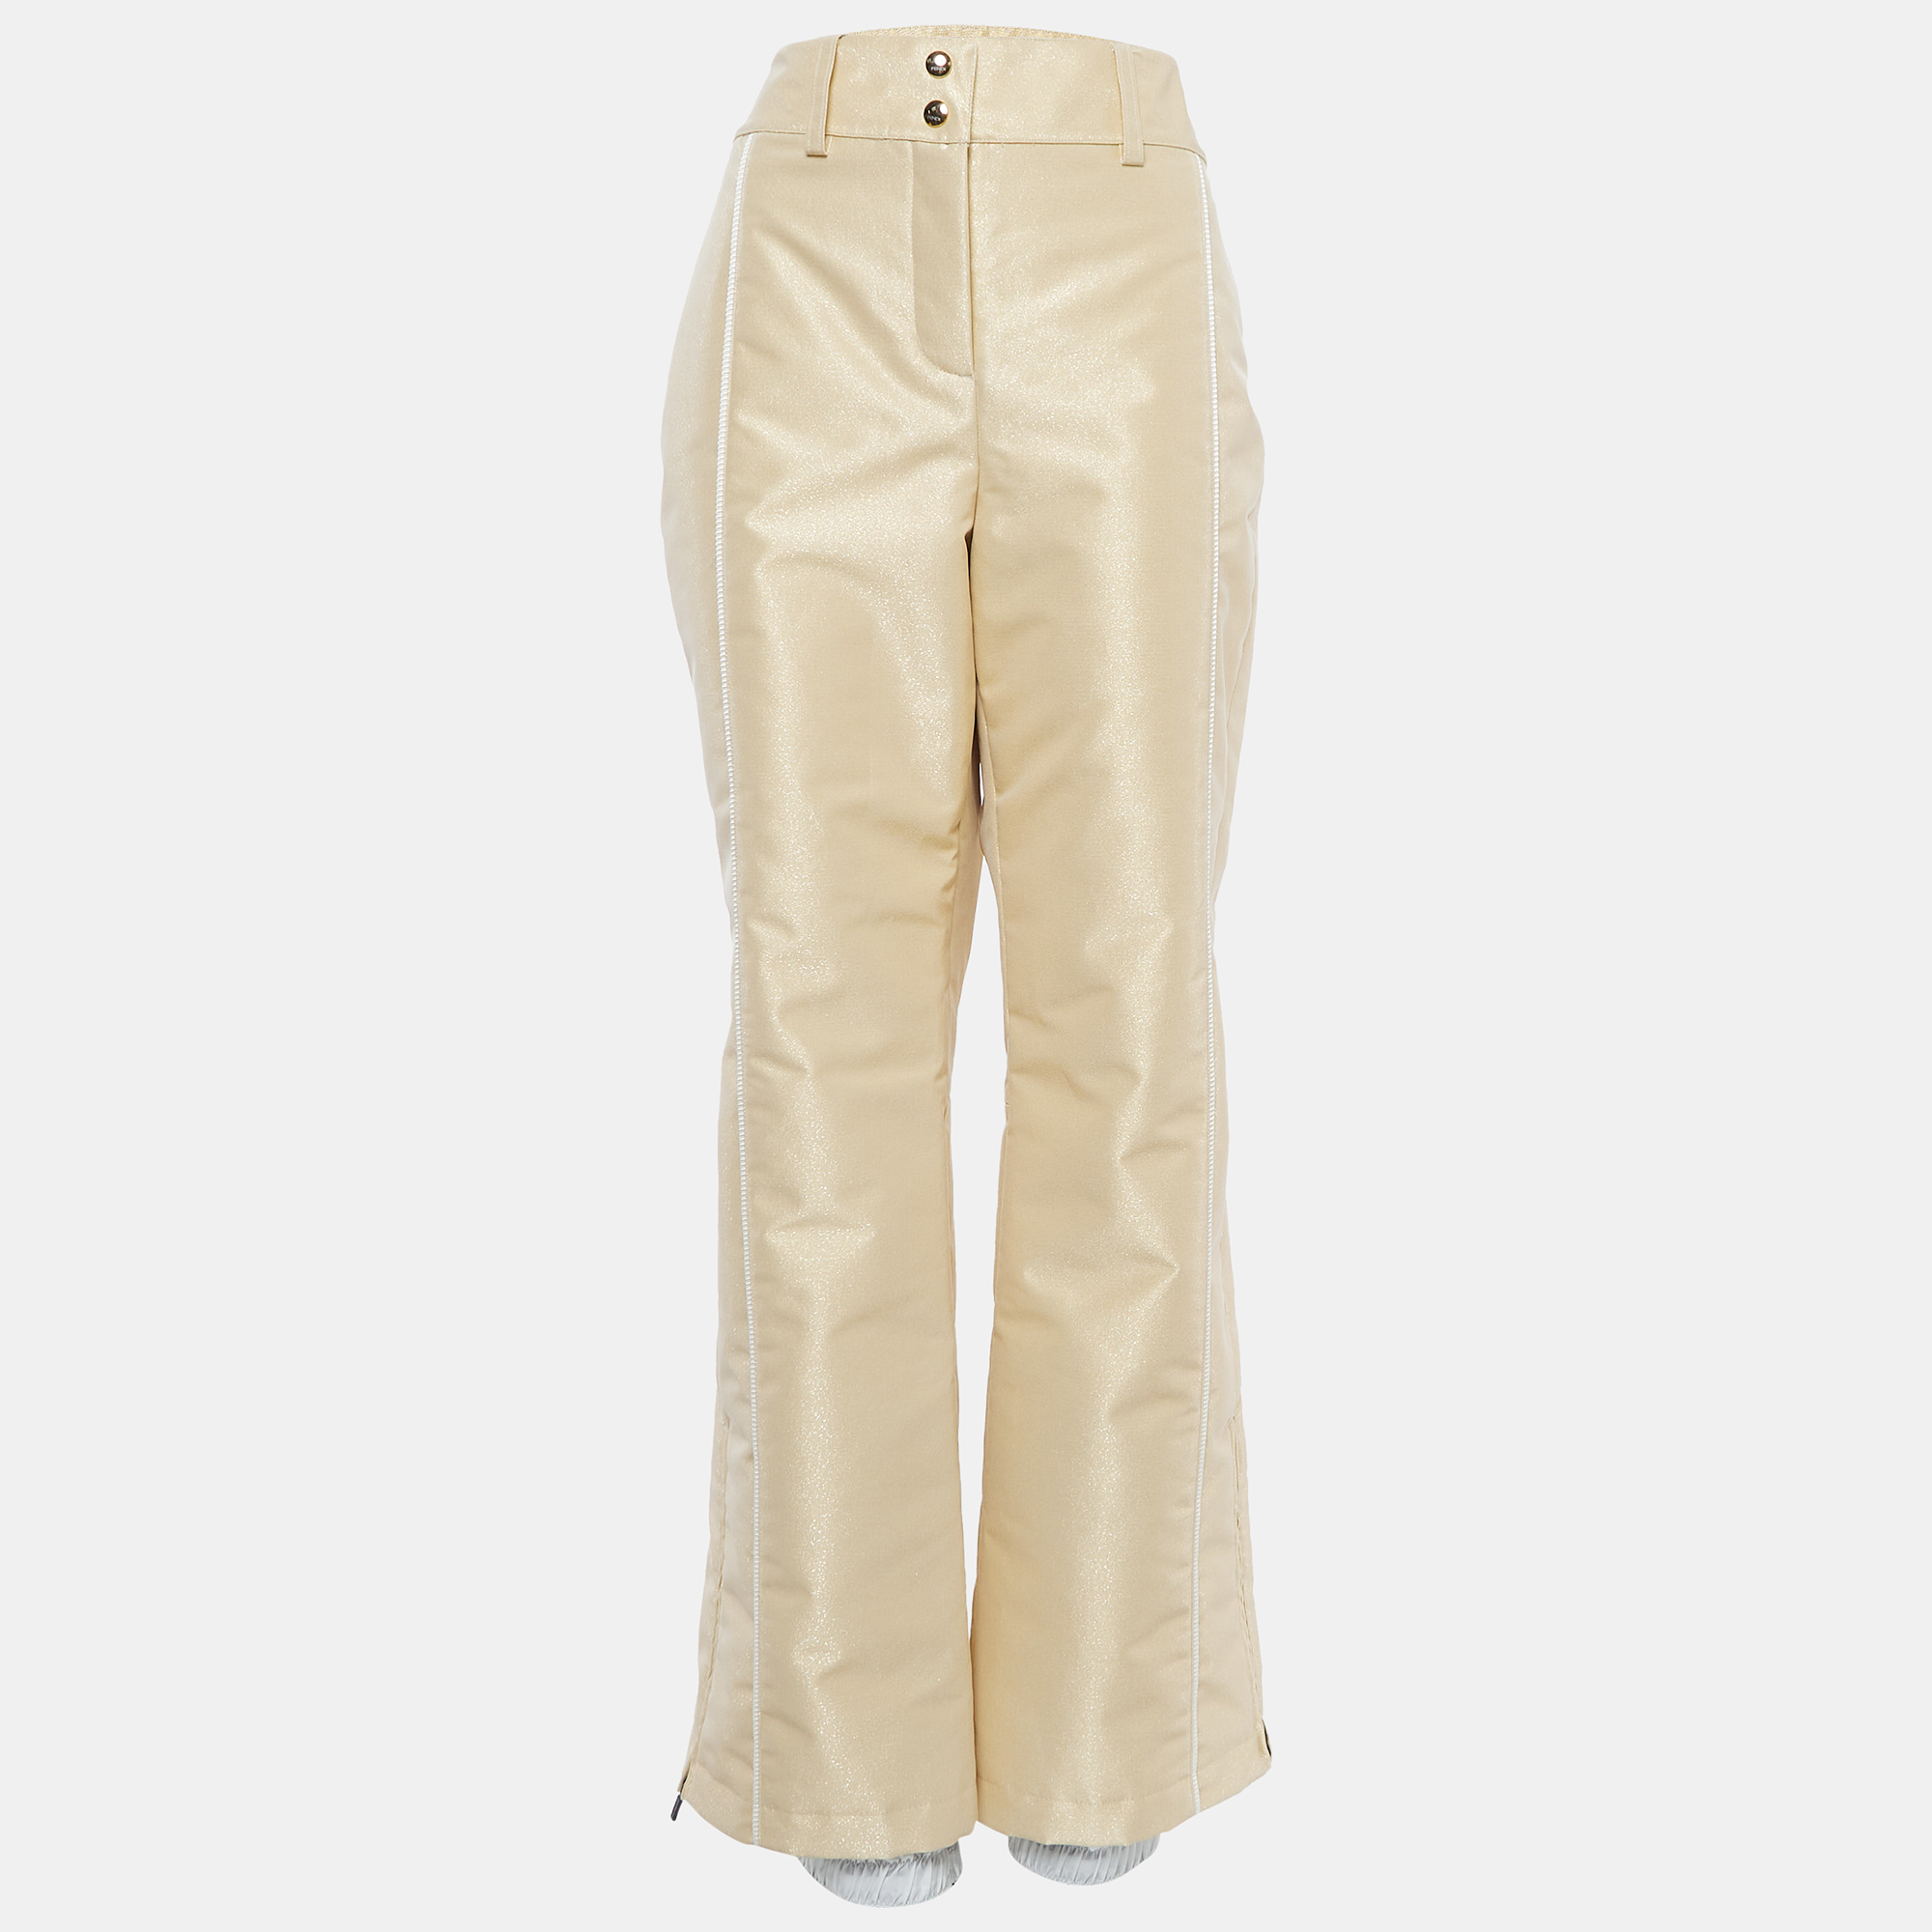 Fendi gold metallic synthetic insulated ski pants l